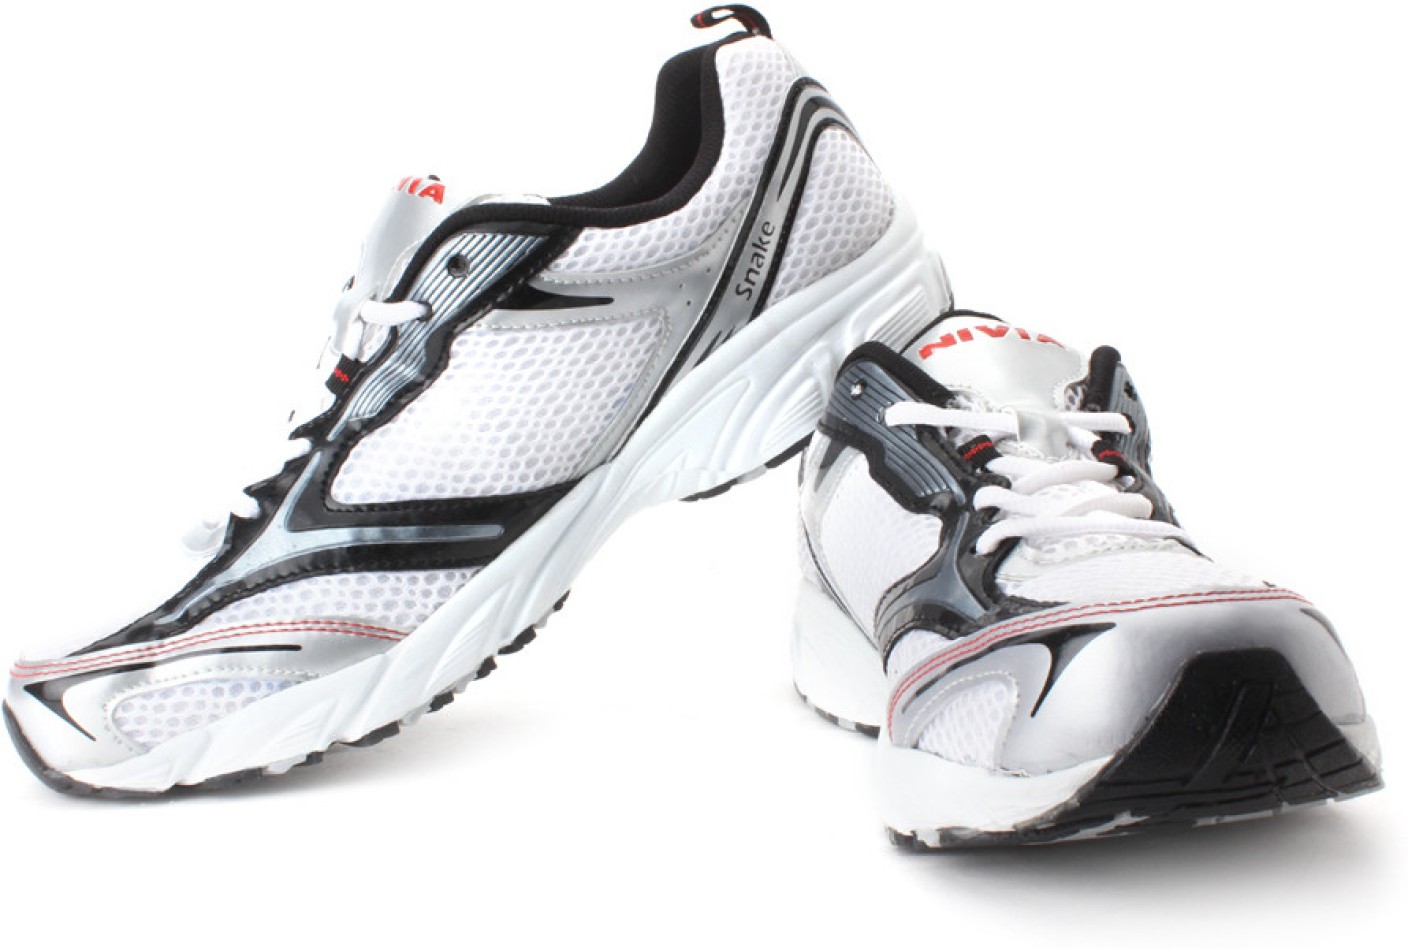 Nivia Snake Jogging Shoes For Men - Buy White, Silver, Black Color ...